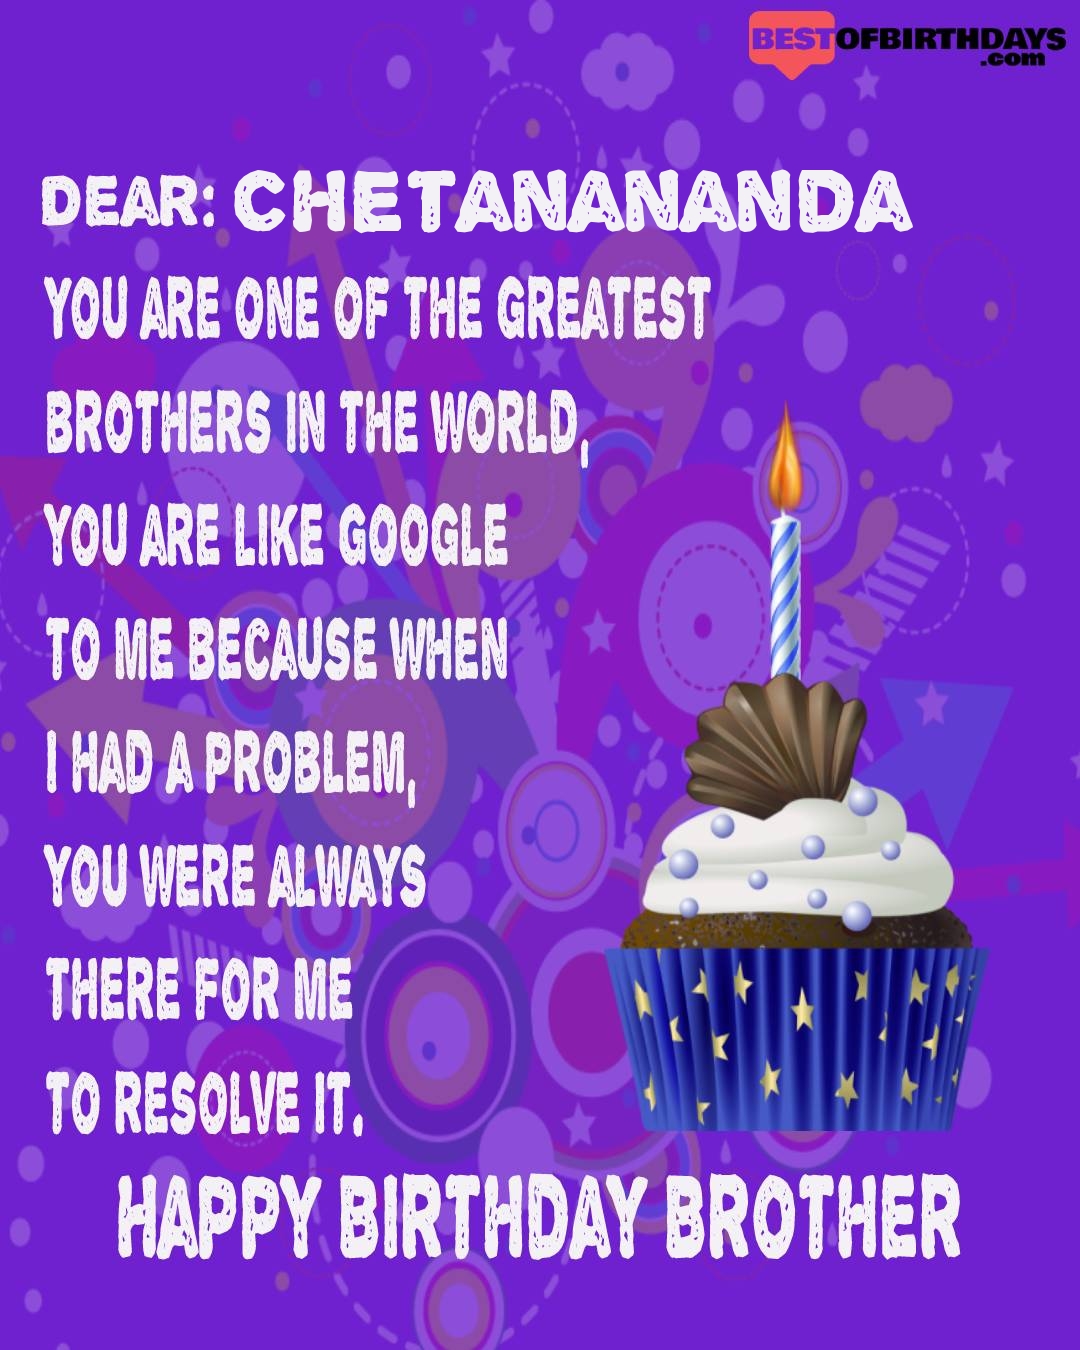 Happy birthday chetanananda bhai brother bro